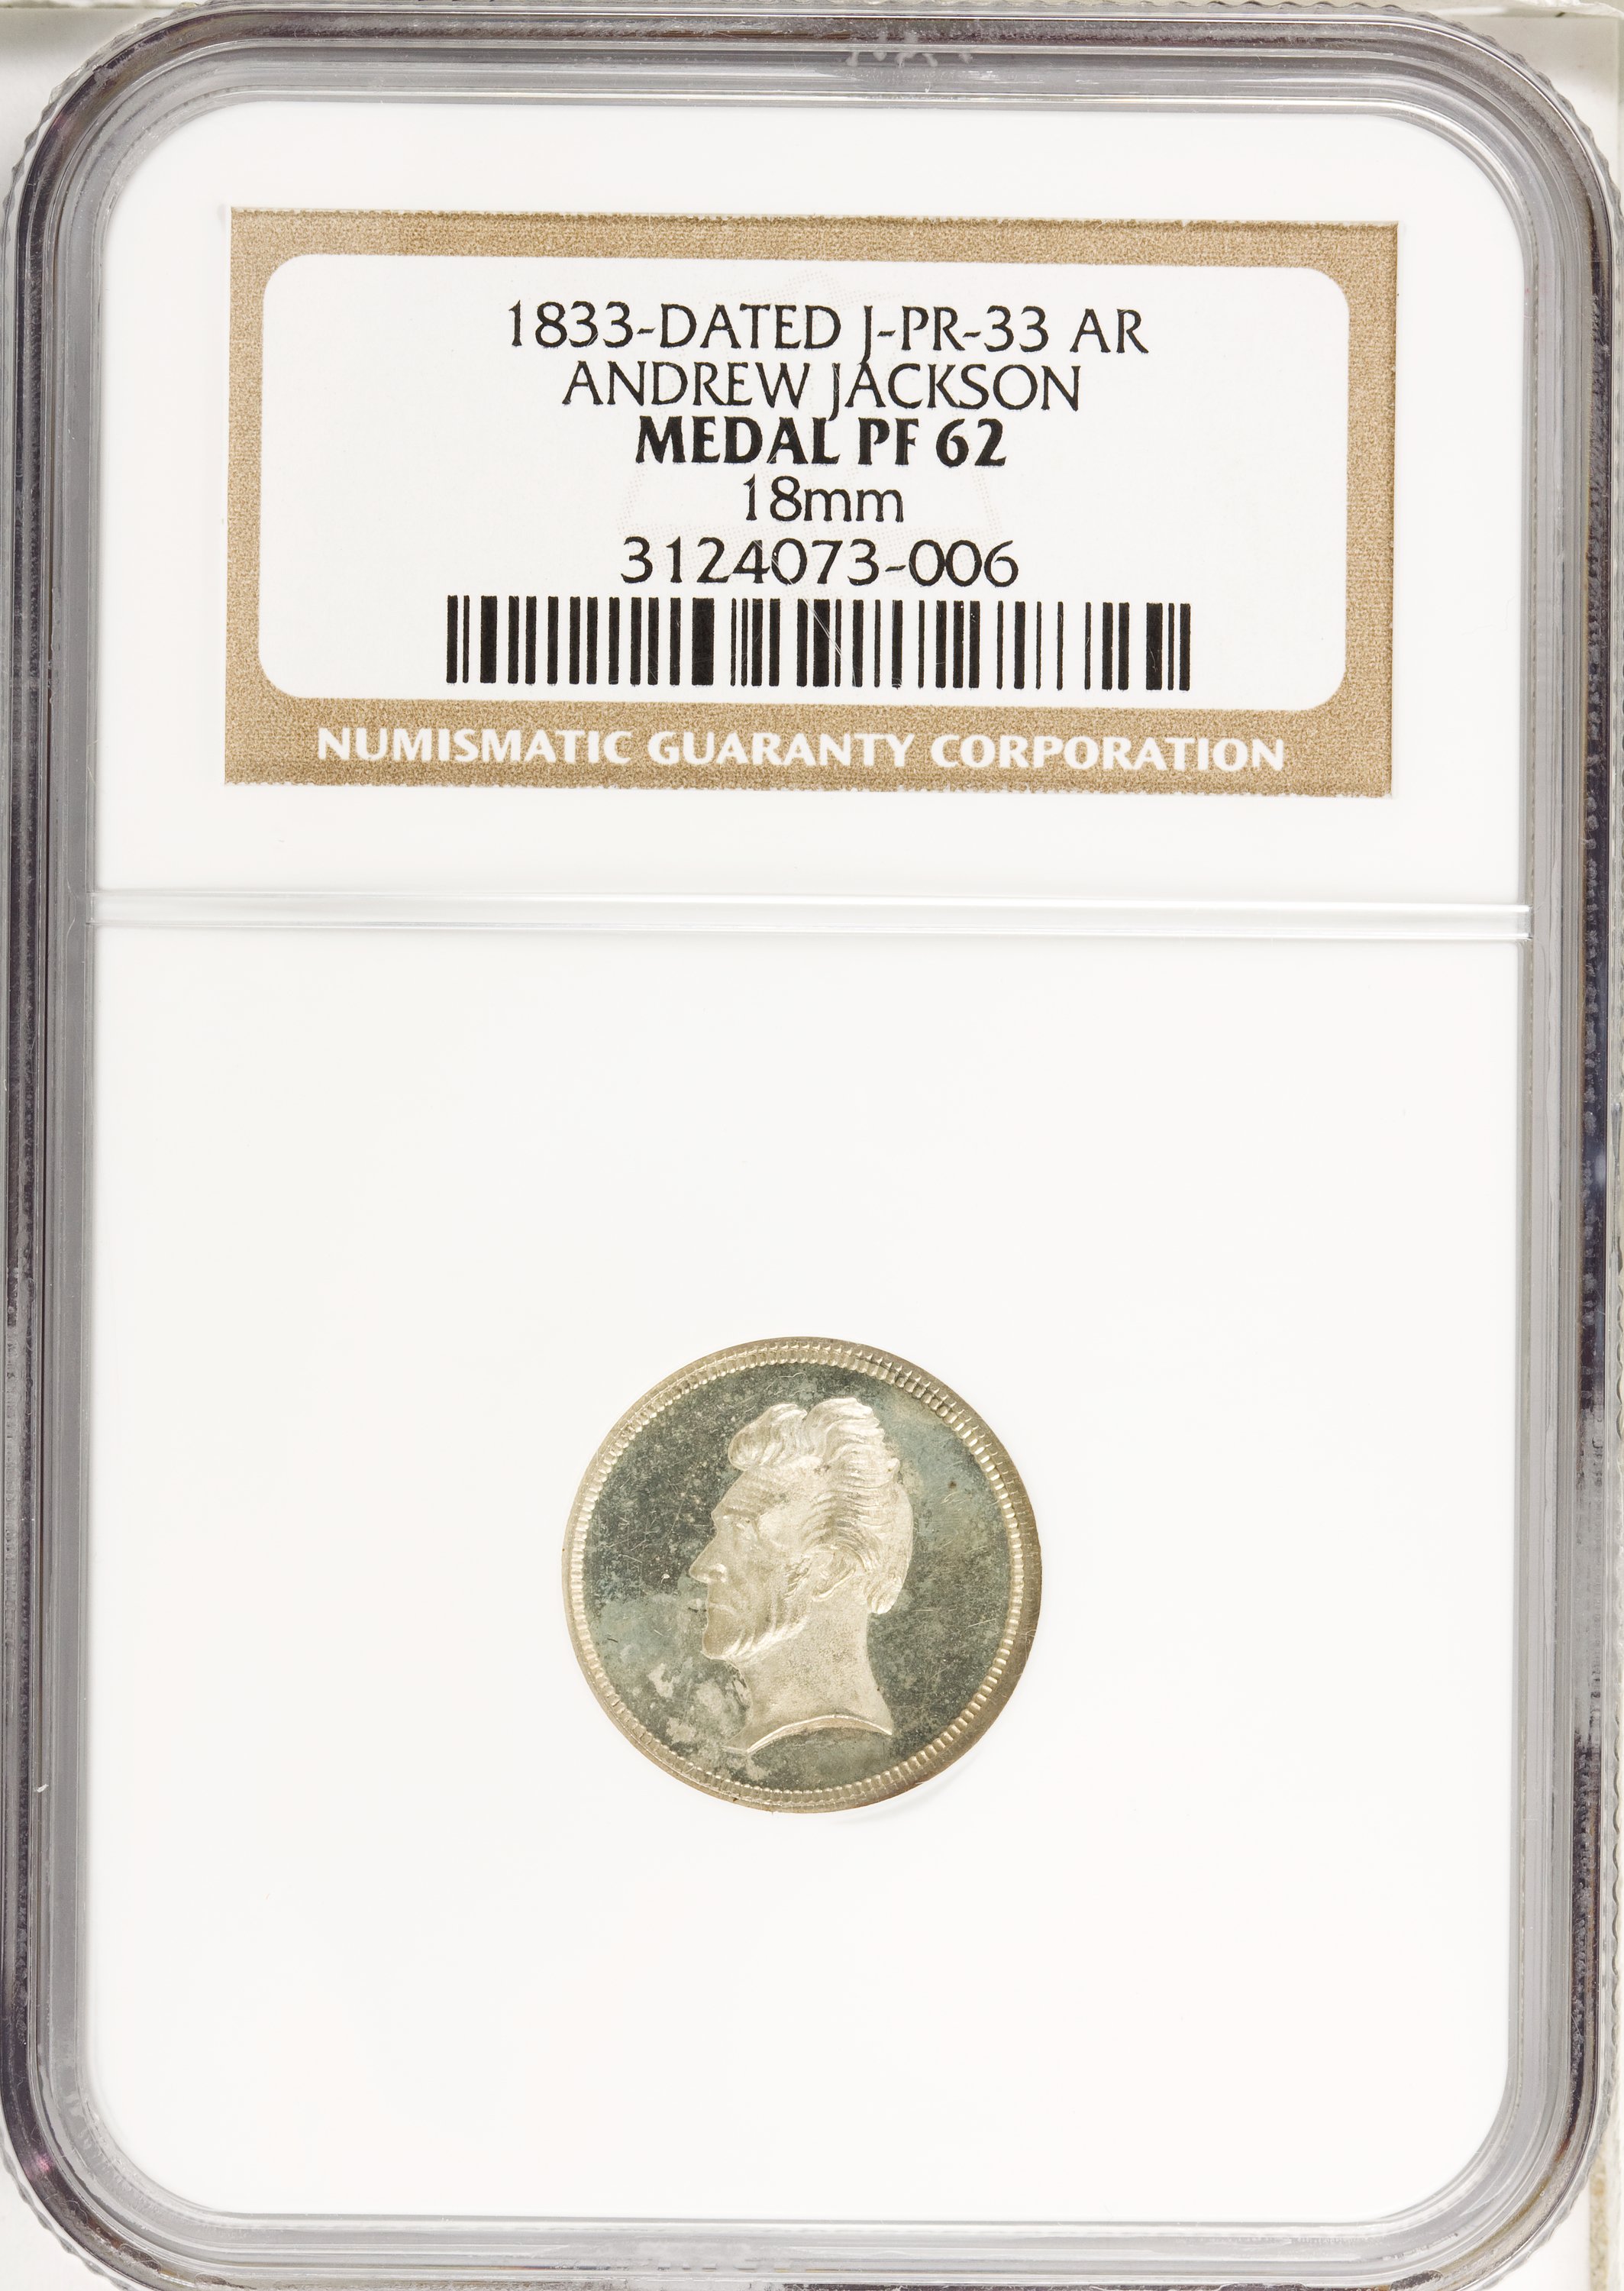 13 34 Andrew Jackson Medal J Pr 33 Pr62 Ngc Silver 18mm Lot 103 Heritage Auctions